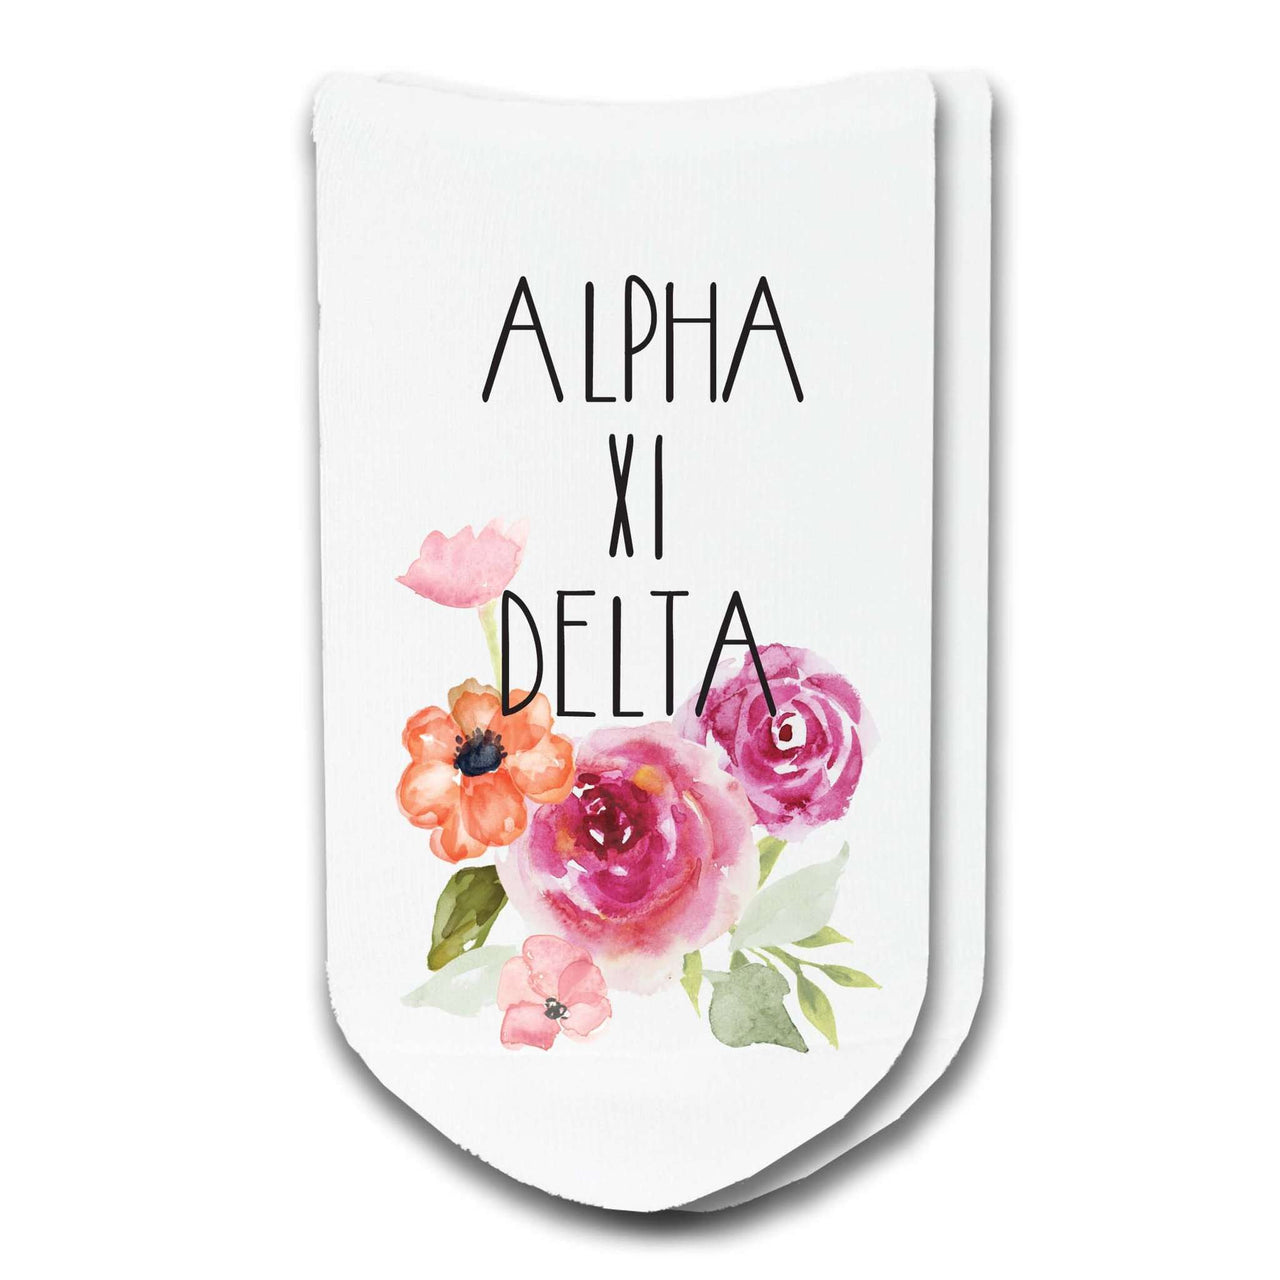 Alpha Xi Delta sorority name watercolor floral design custom printed on no show socks